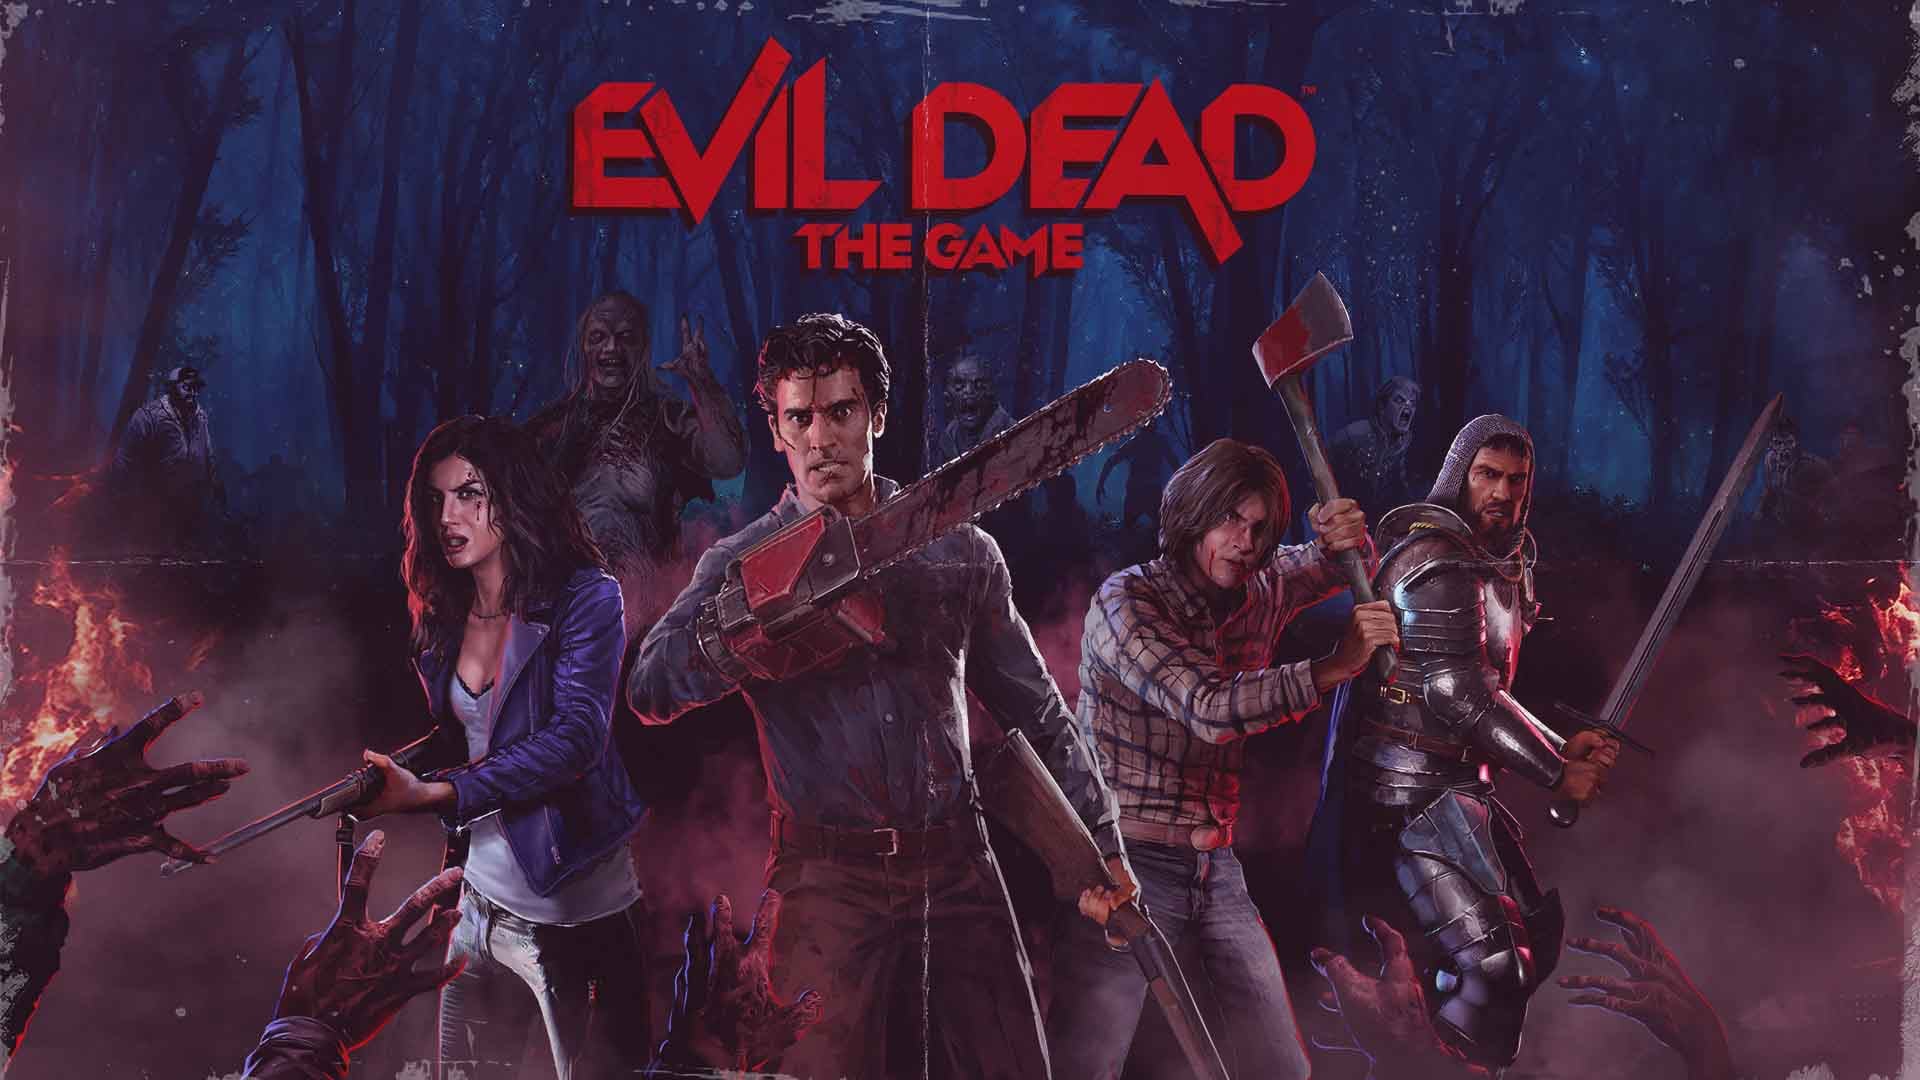 Evil dead the game screenshot 10 06 2021 4 min 13